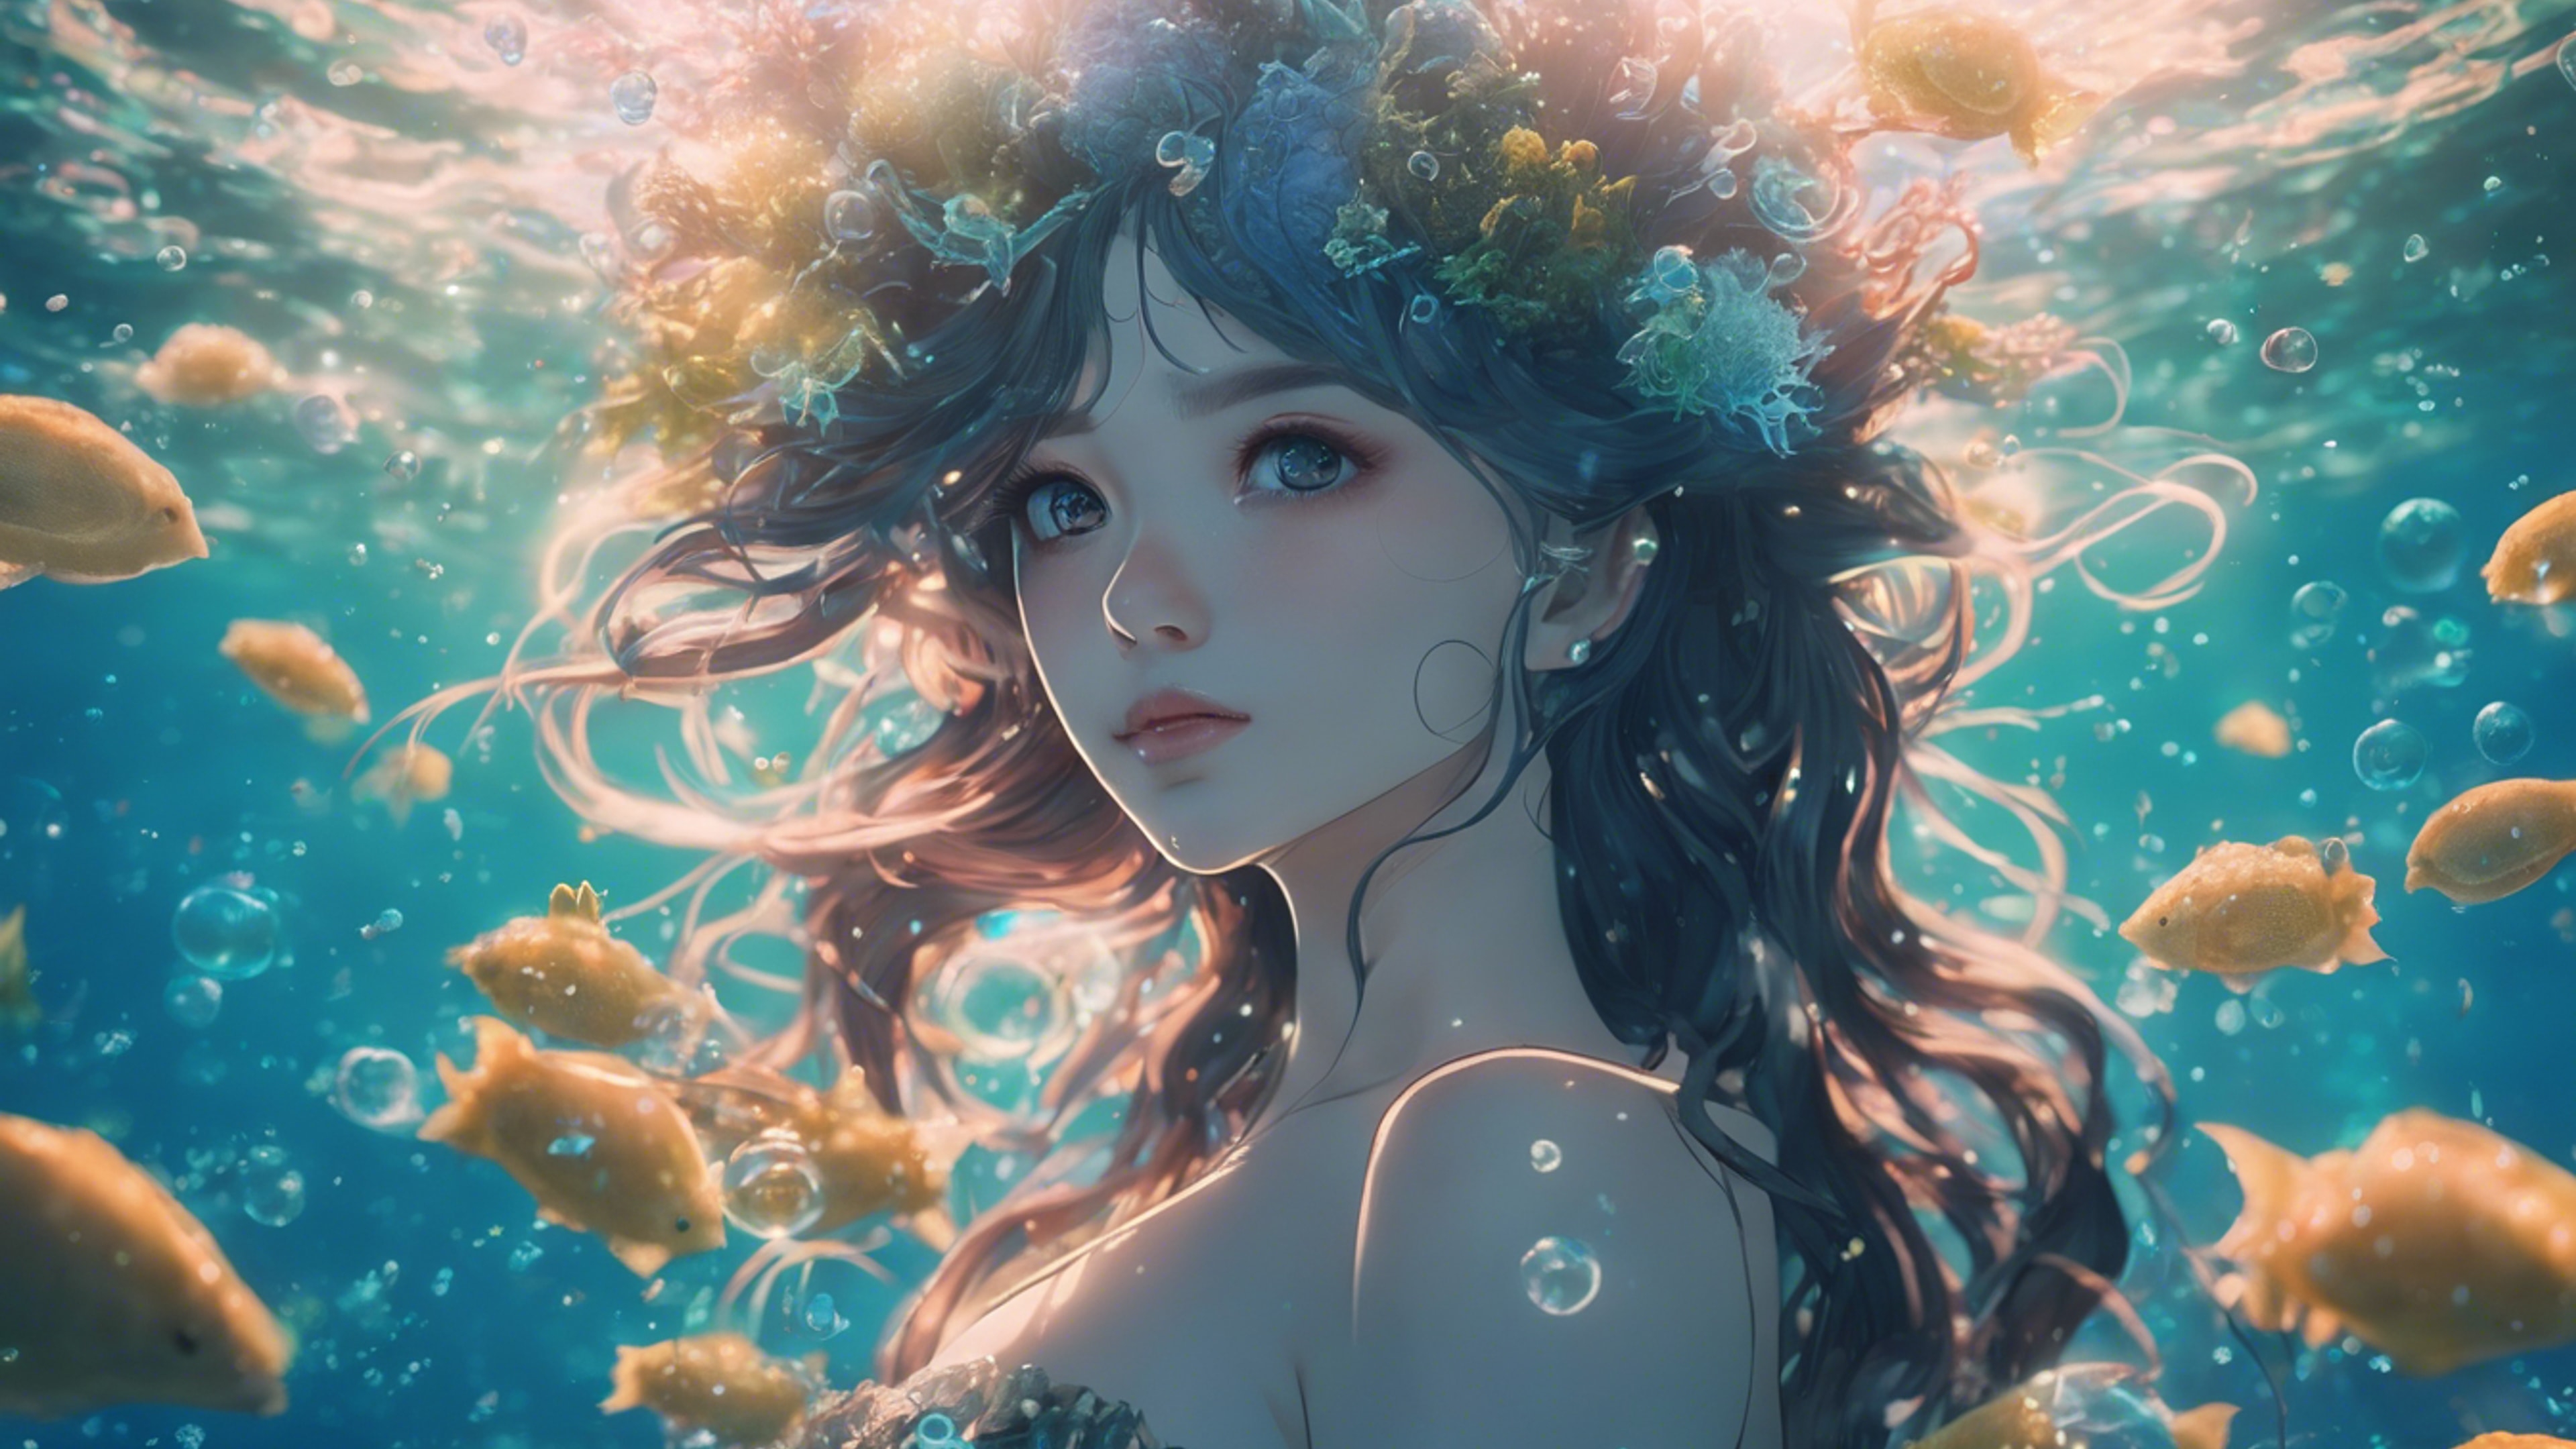 Anime-inspired underwater mermaid kingdom glittering with bioluminescent organisms. Divar kağızı[b6d868a85fc94f08be6c]